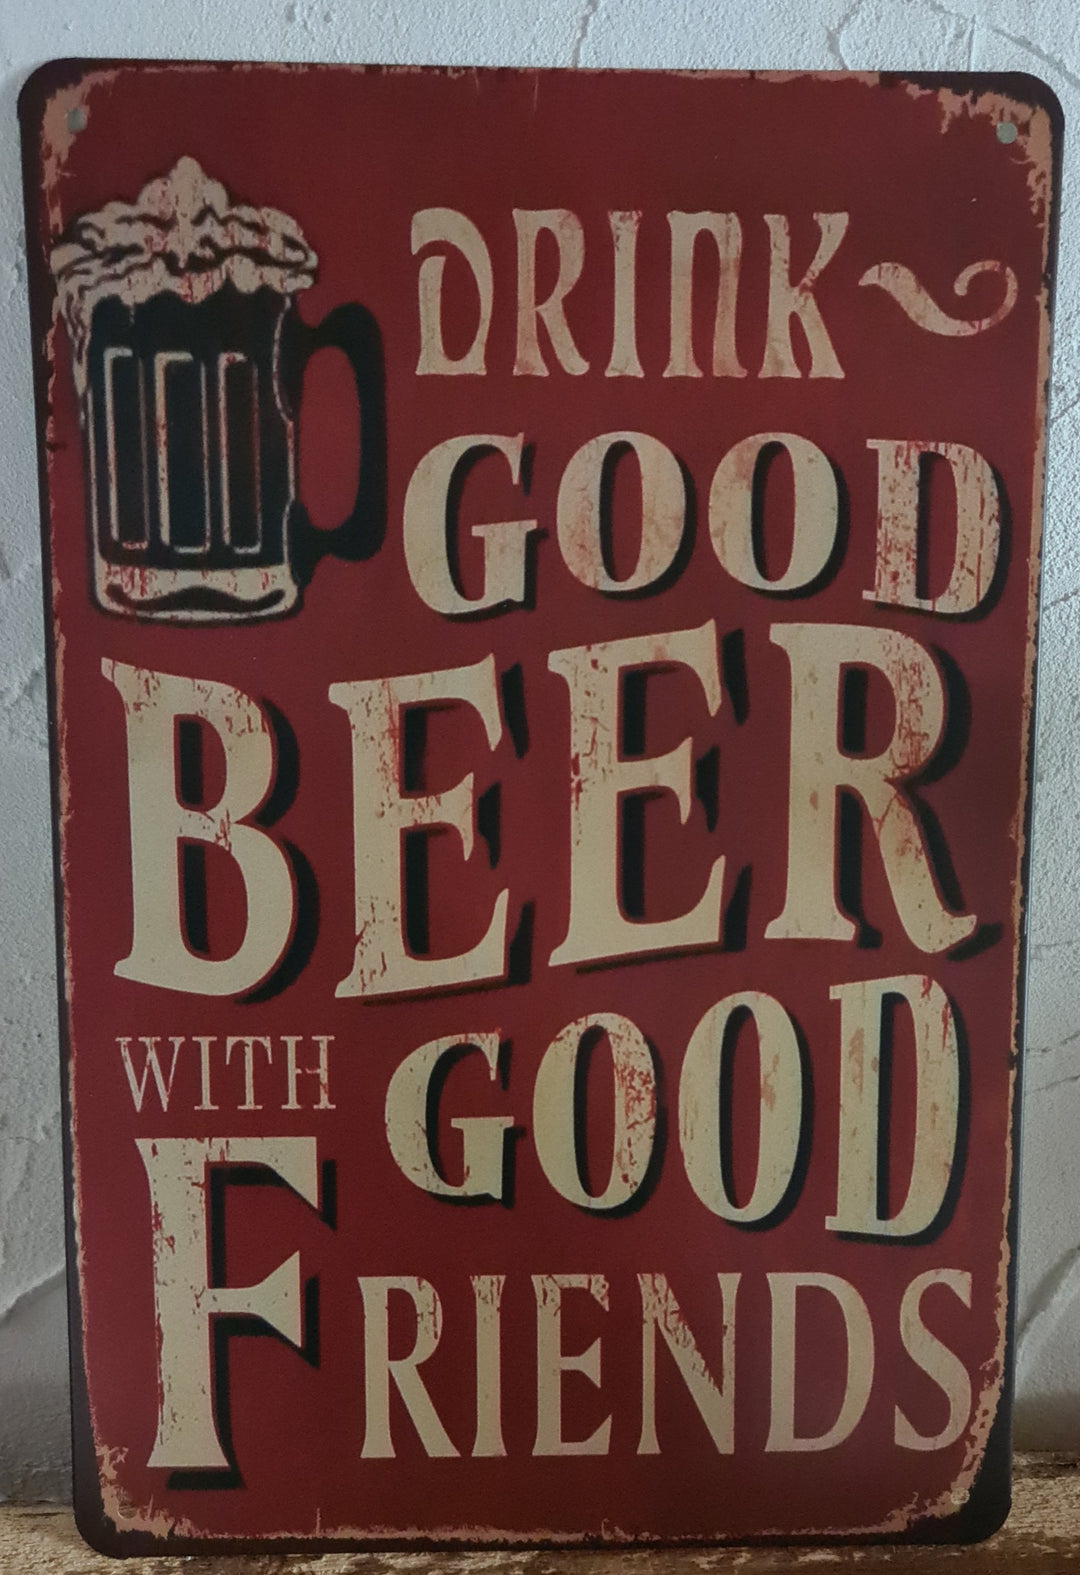 Blechschild  ca. 31 cm  x  20 cm mit Beschriftung "Drink Good Beer with good friends" - British Moments